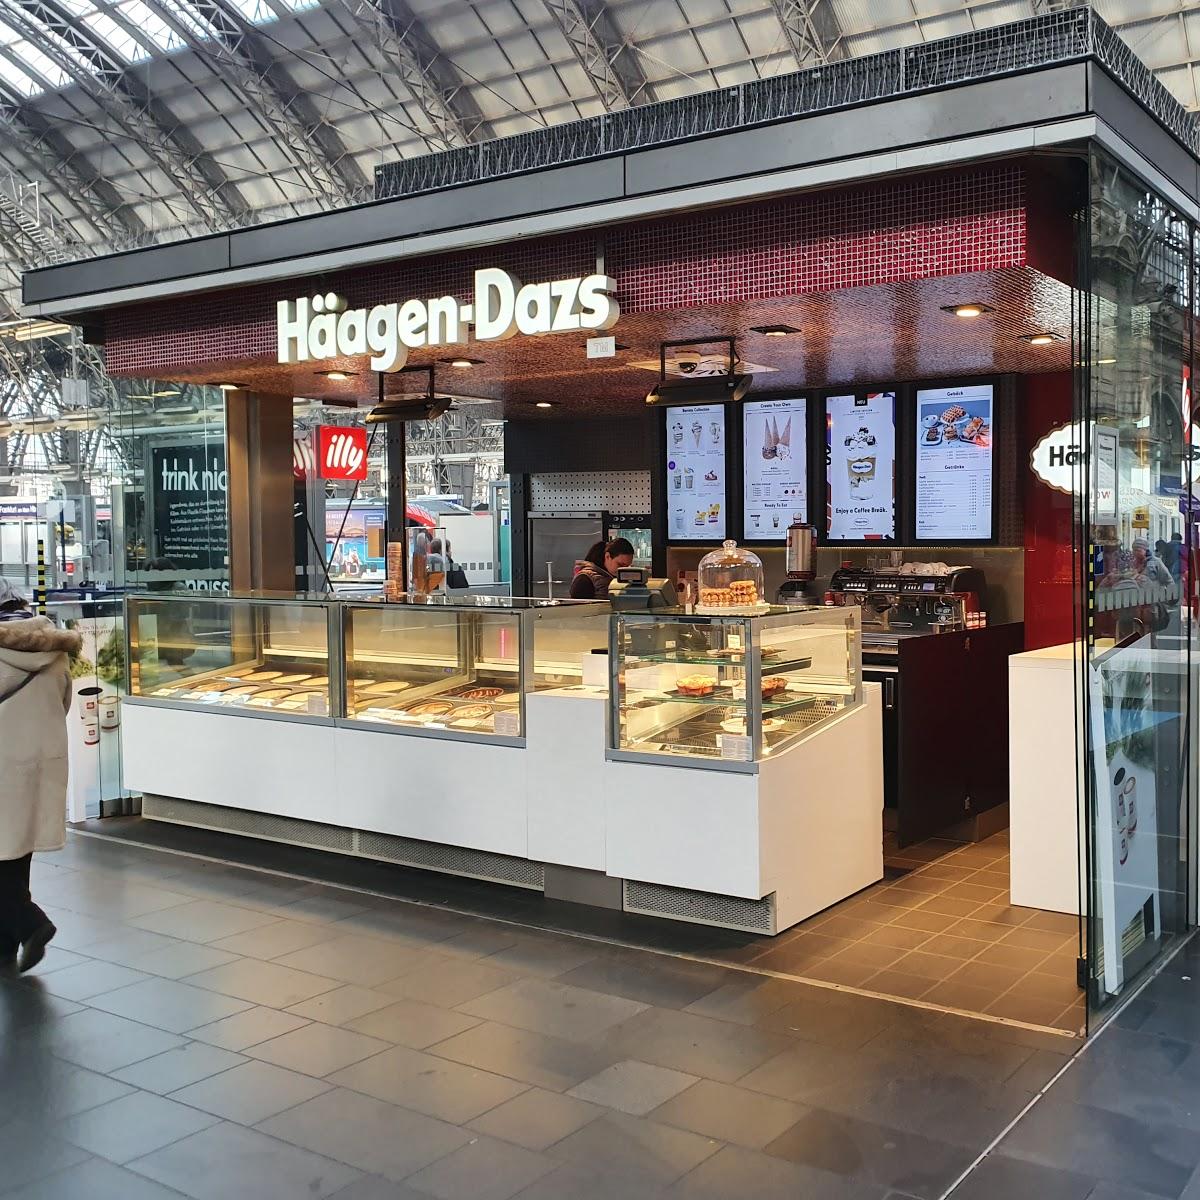 Restaurant "Häagen-Dazs" in Frankfurt am Main